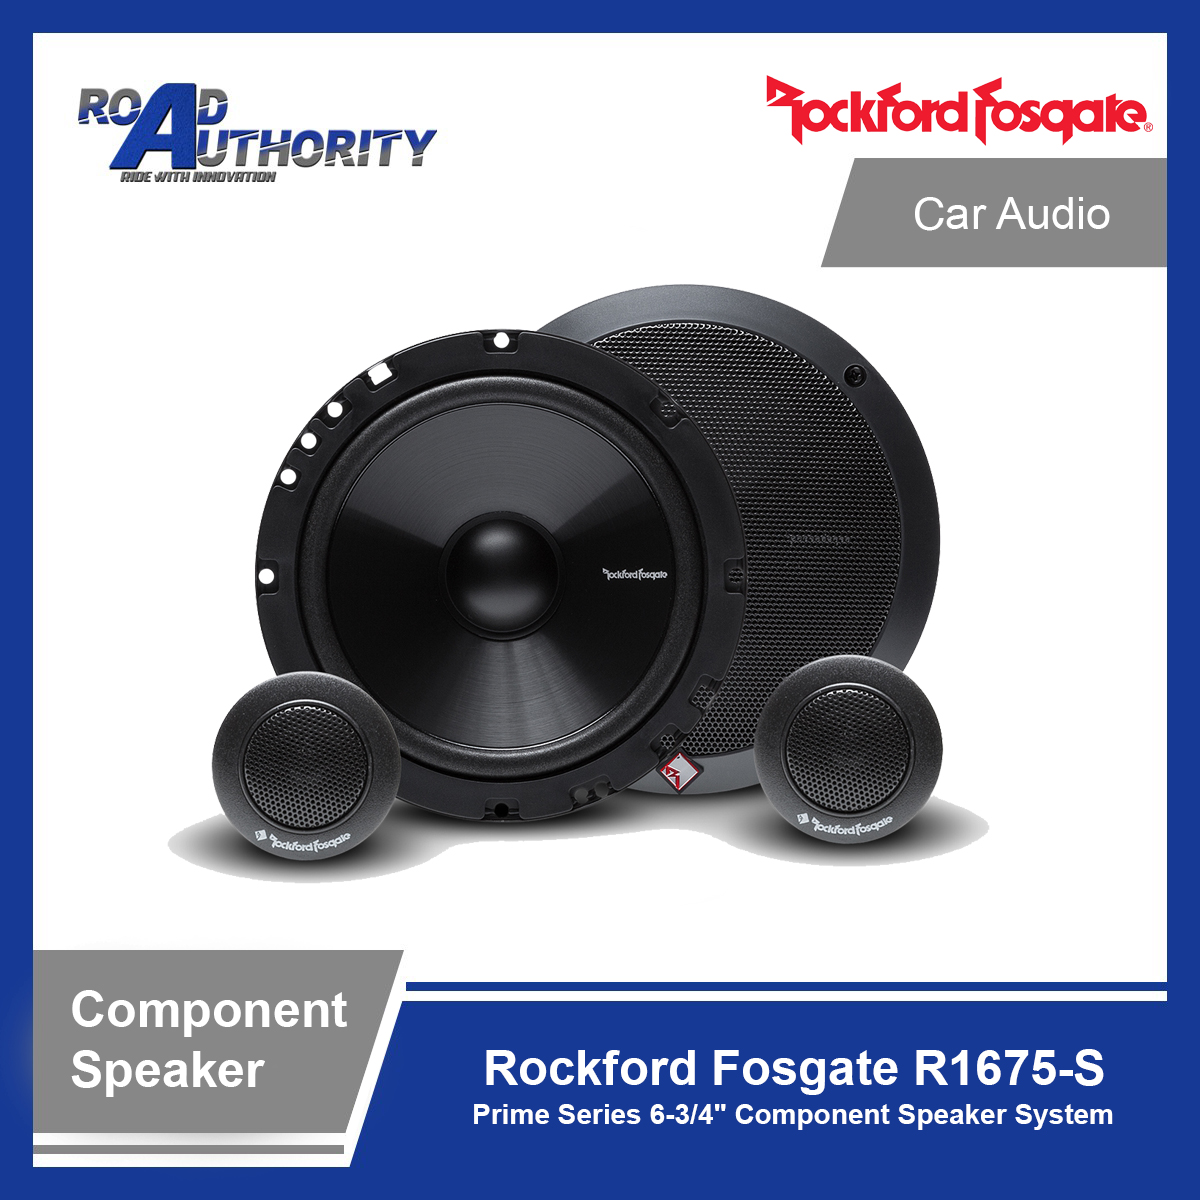 Rockford Fosgate R1675-S Prime Series 6-3/4